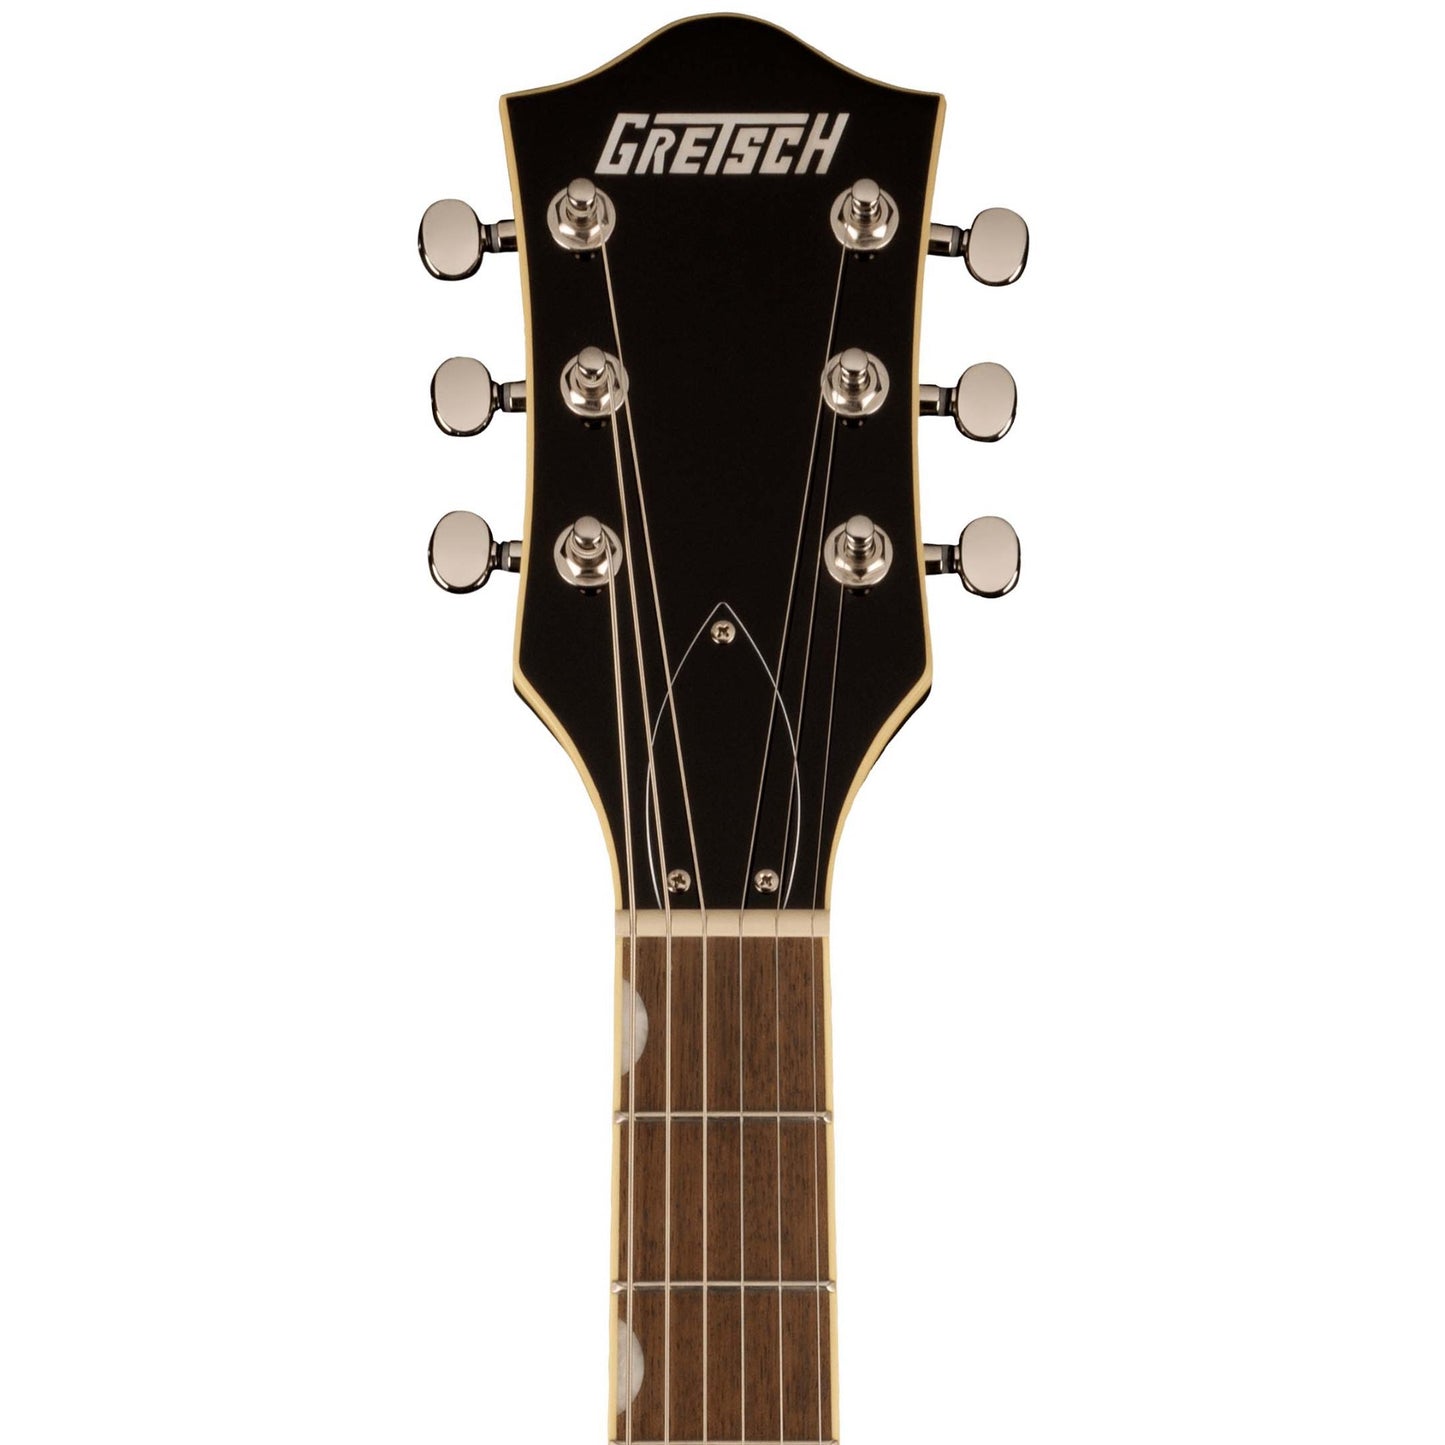 Gretsch G5655T-QM Electromatic Center Block Jr. Electric Guitar in Hudson Sky